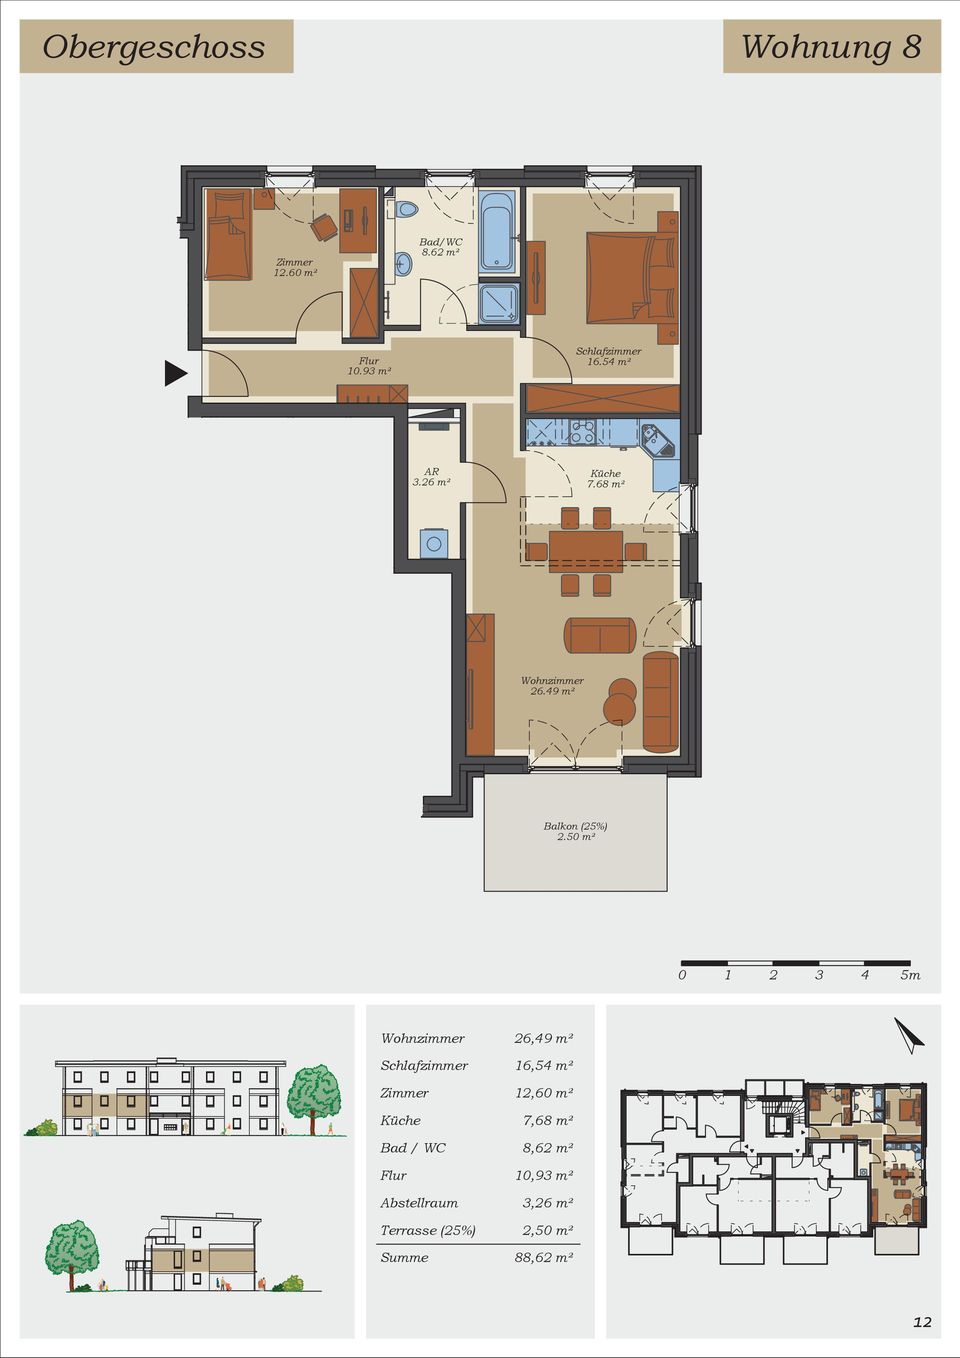 50 m² 0 1 2 3 4 5m Zimmer Bad / WC Summe 26,49 m² 16,54 m²